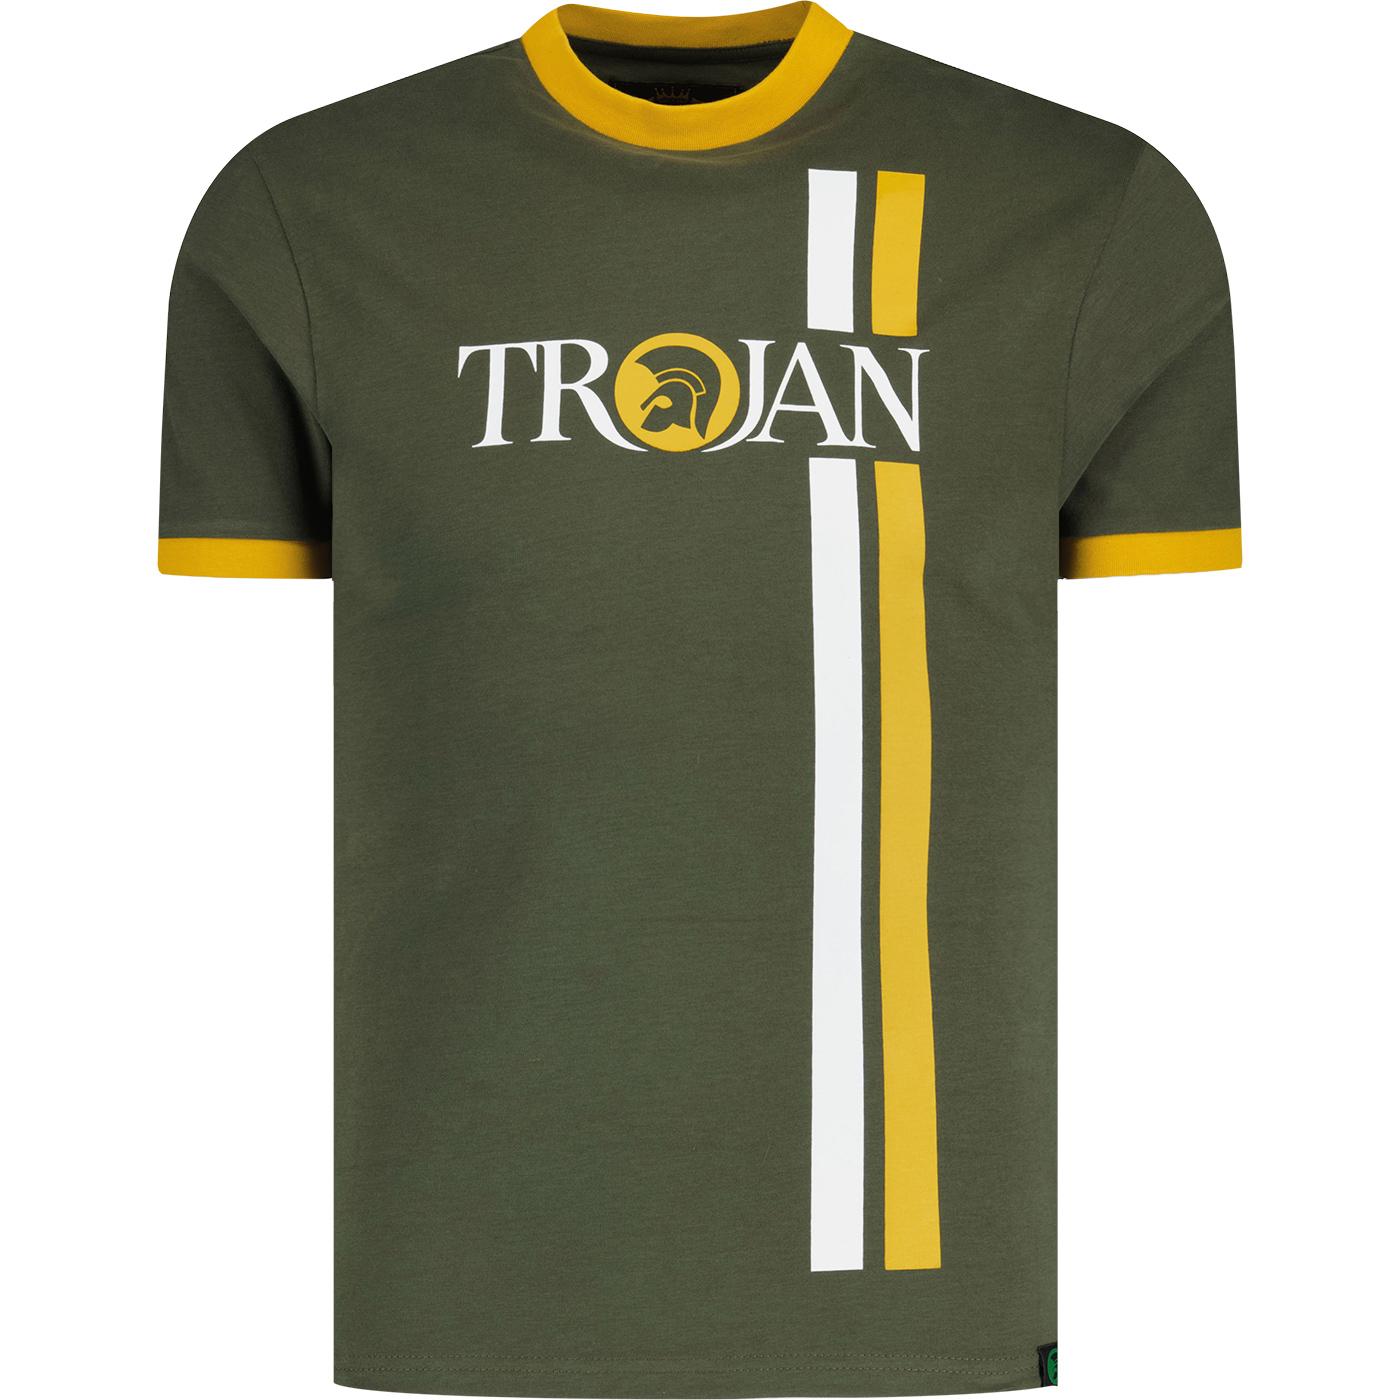 Trojan Records Retro Racing Stripe Logo Tee Army 